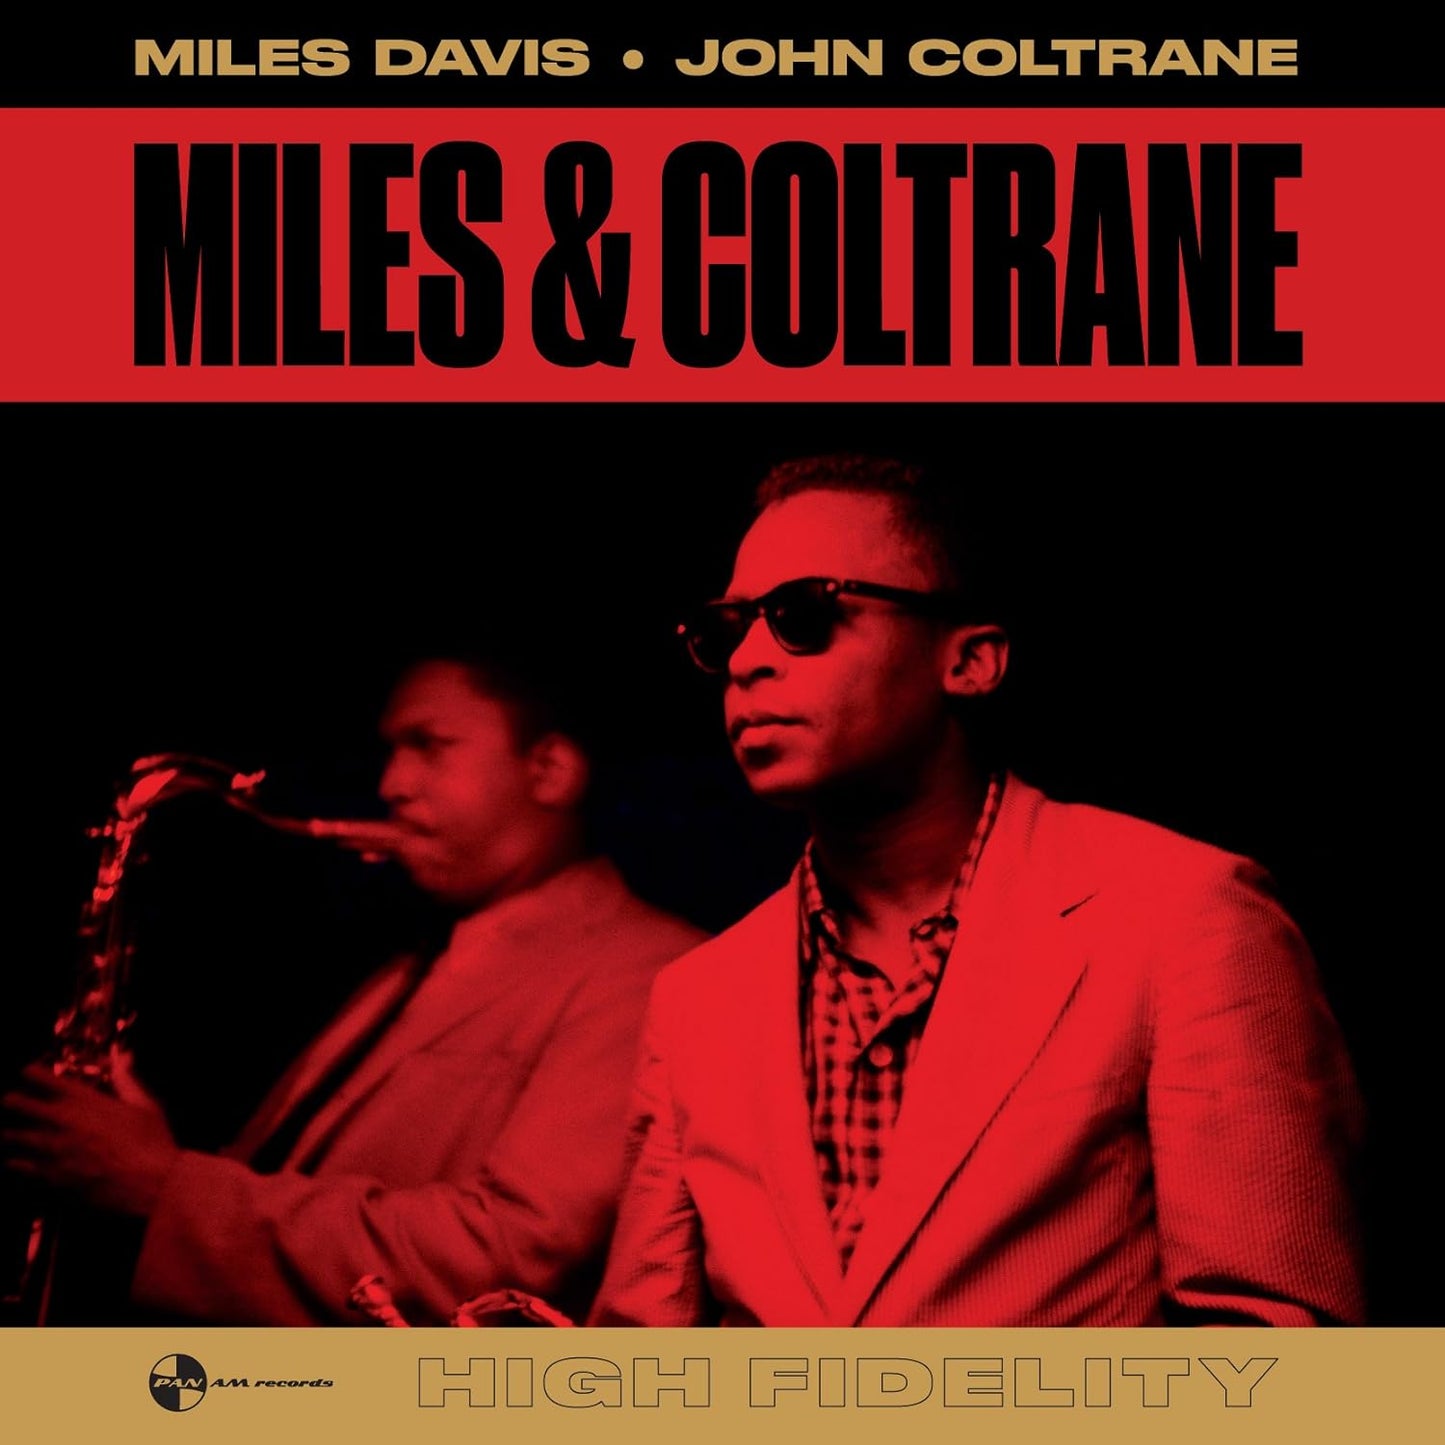 Miles Davis/John Coltrane - Miles & Coltrane (Vinile 180gr.)